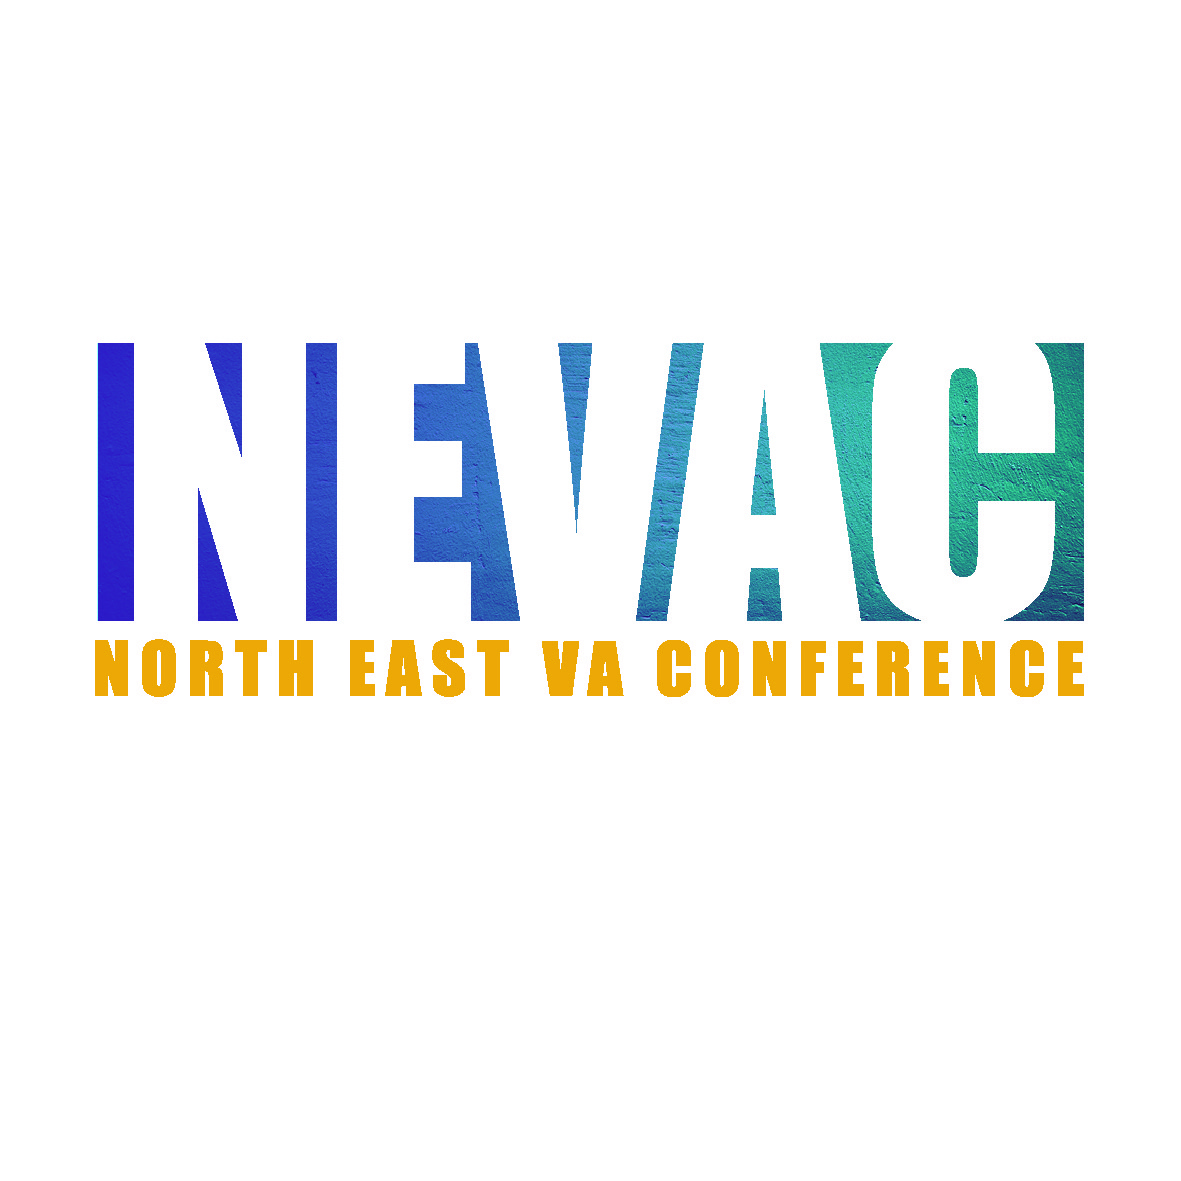 North East VA Conference